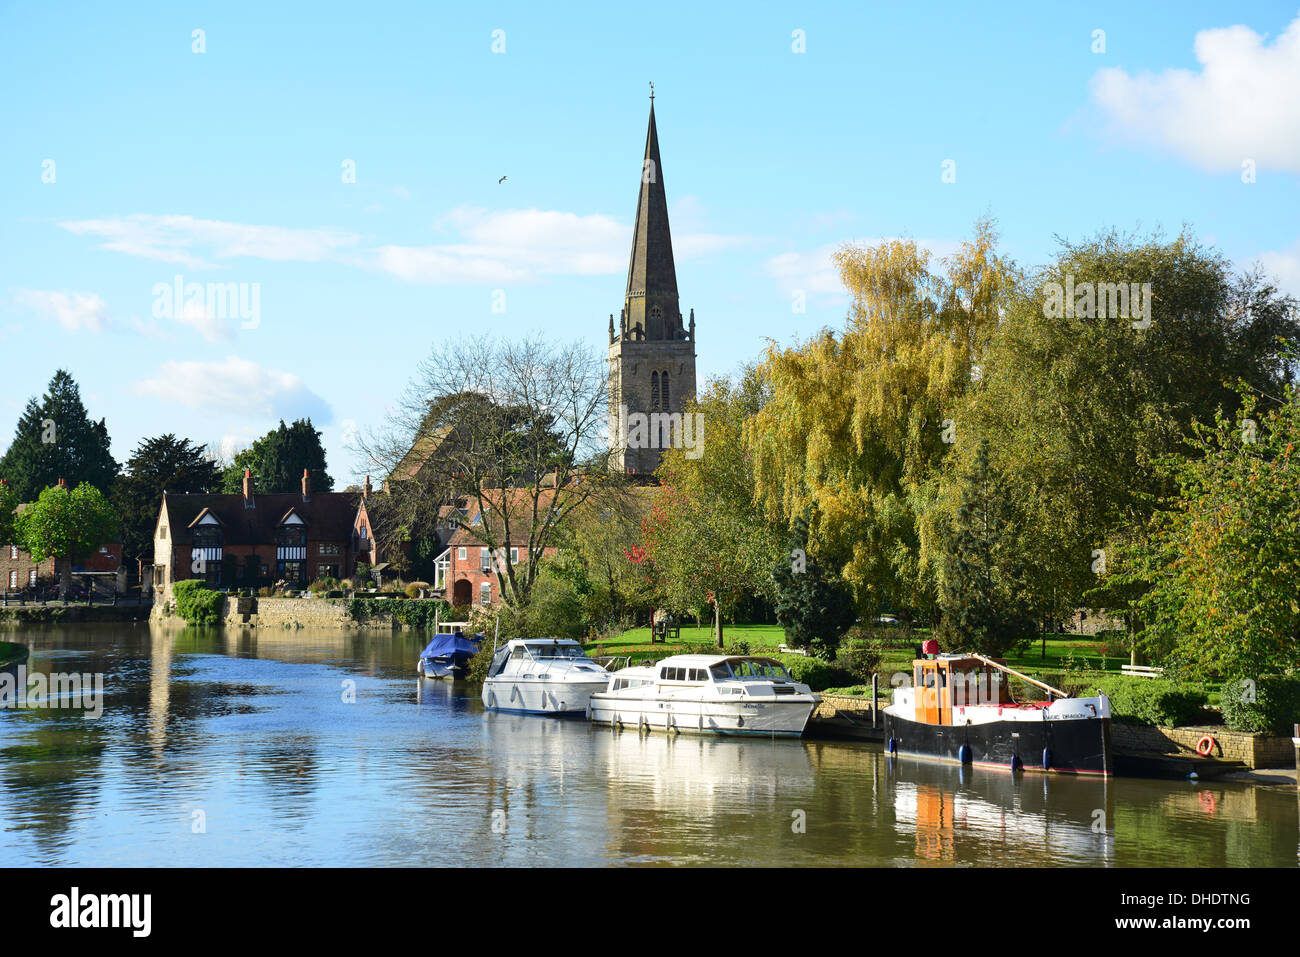 Nag's Head Island and St Helen's Church across River Thames, Abingdon-on-Thames, Oxfordshire, England, United Kingdom Stock Photo